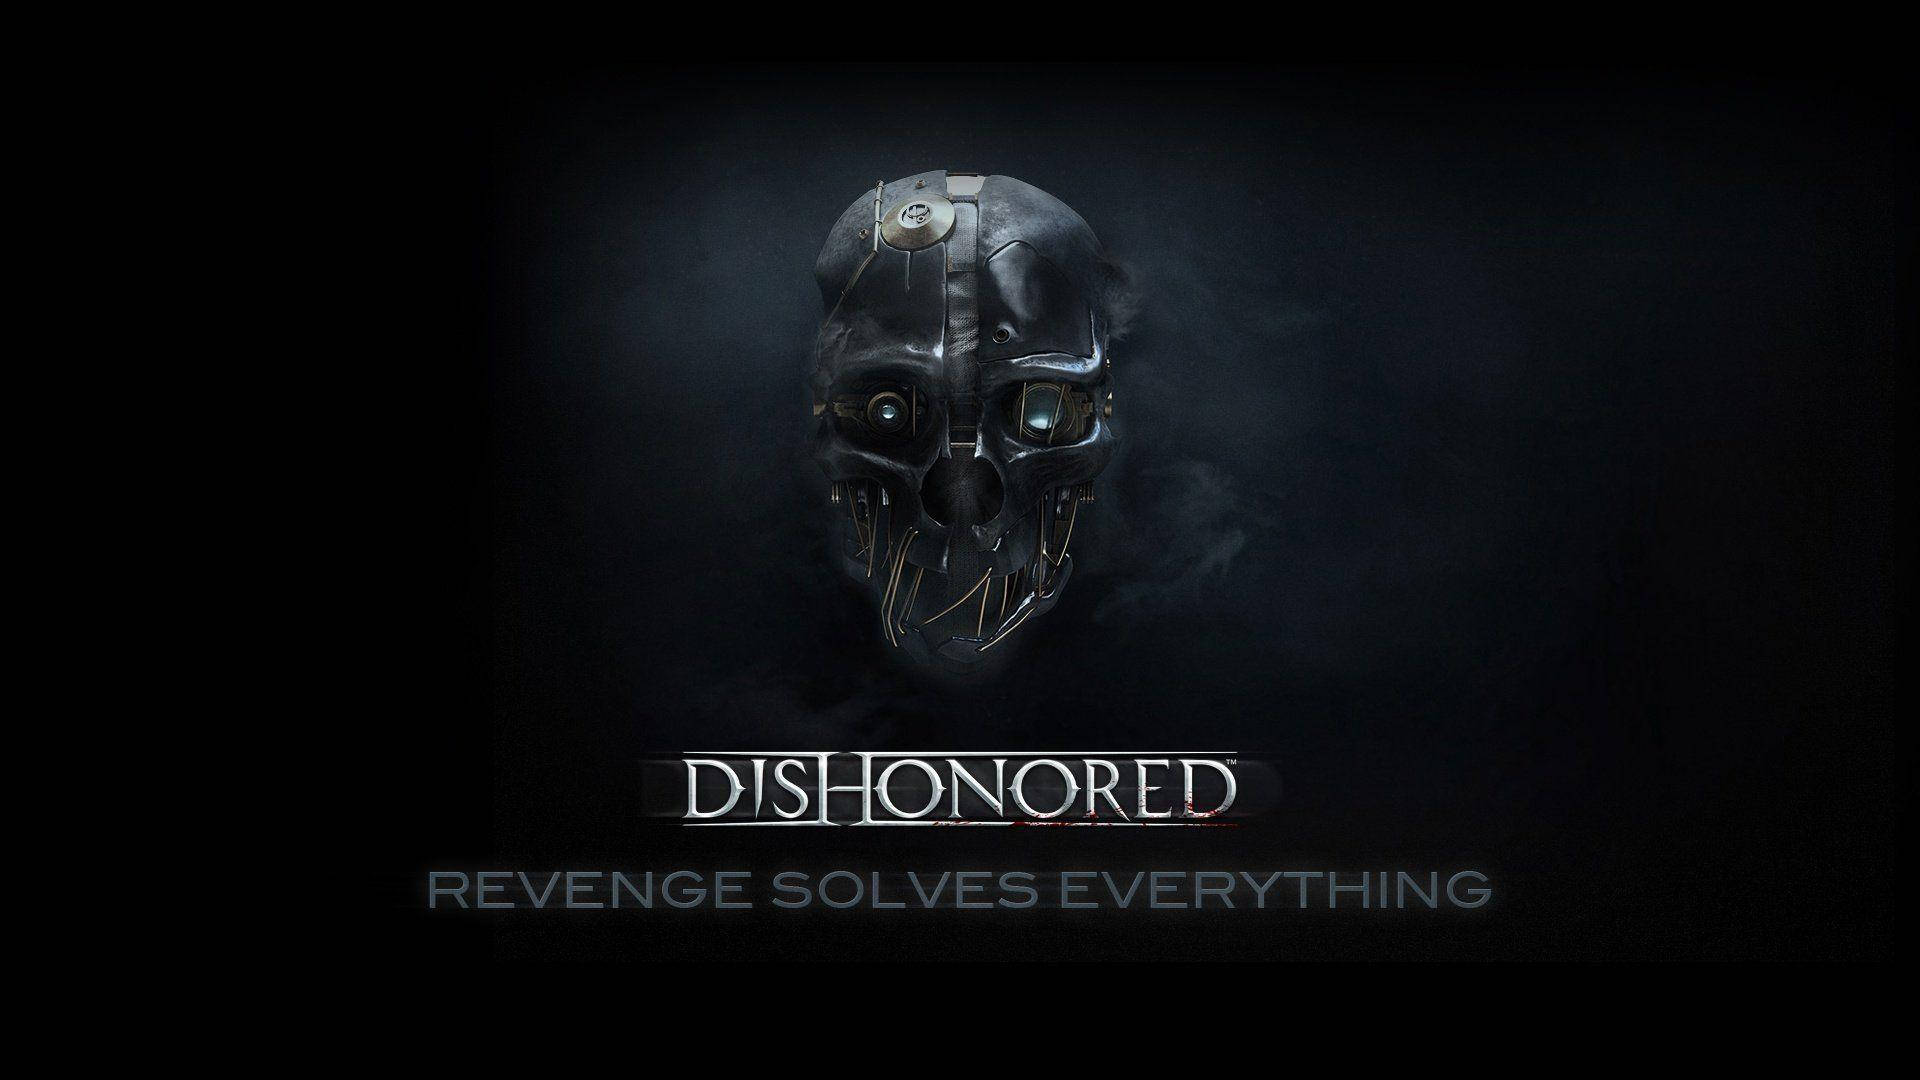 Dishonored Revenge Quote Wallpaper